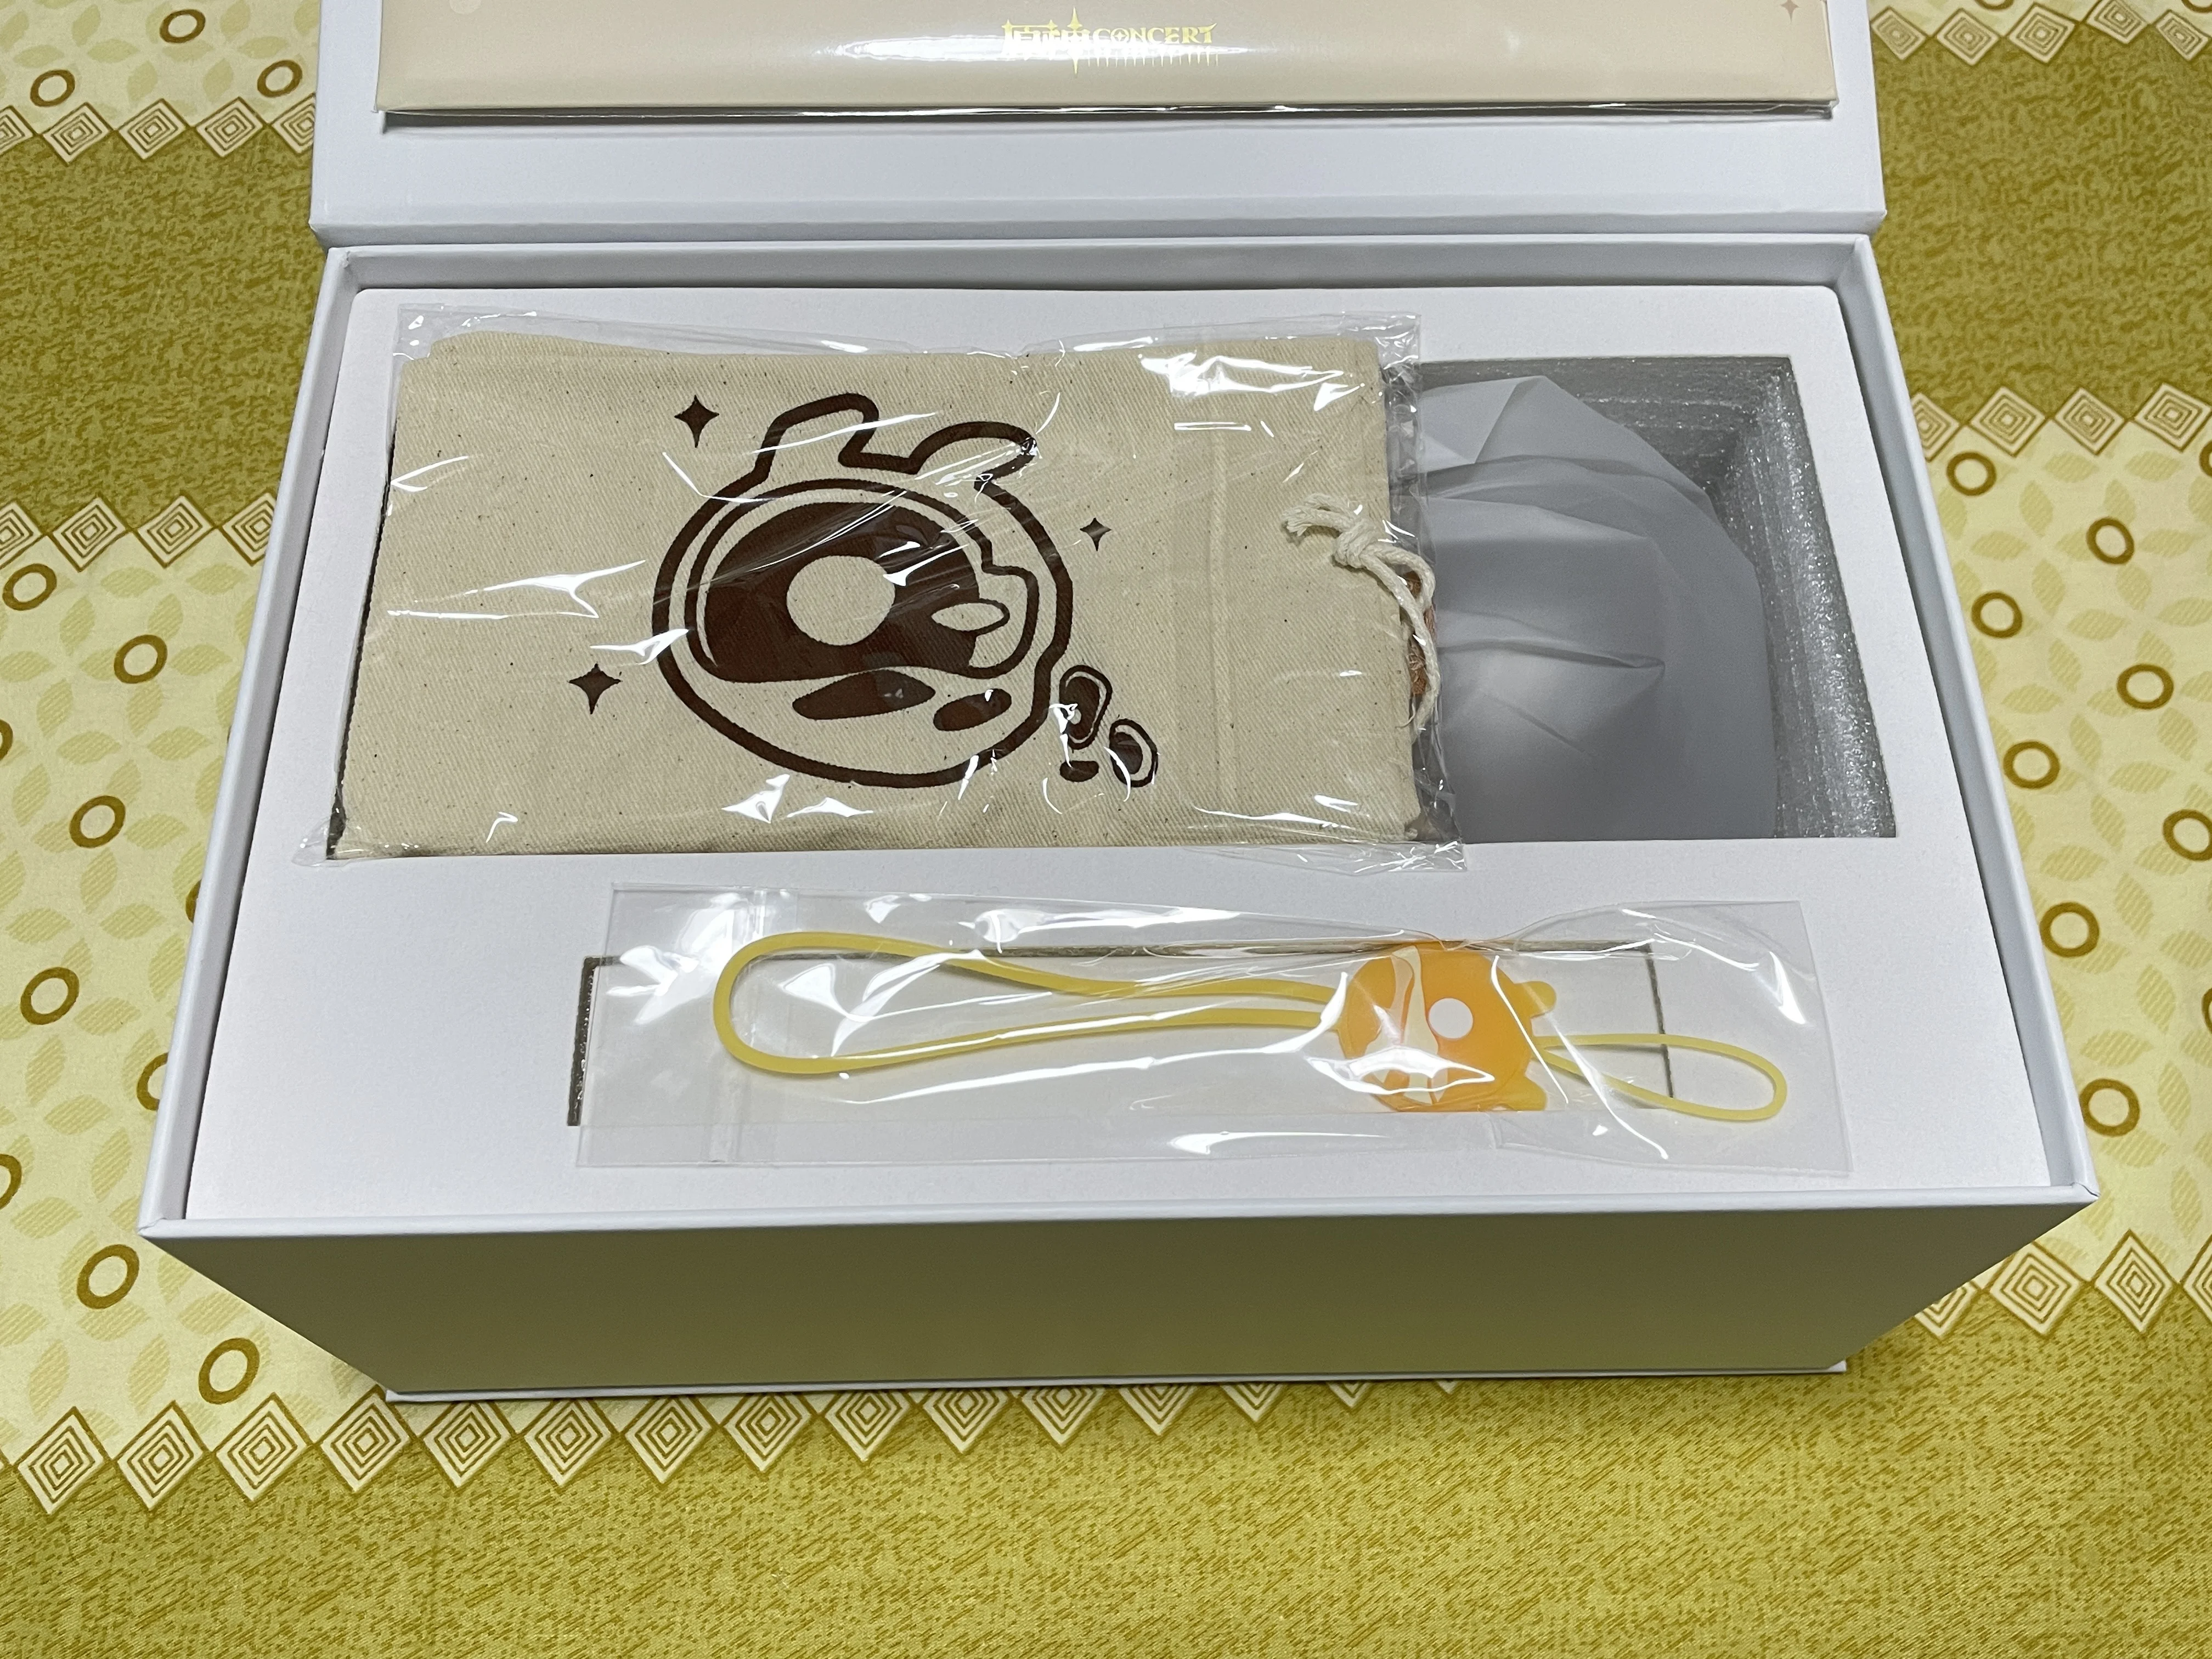 Genshin Impact Genshin Concert 2023 Atmosphere Light Stick Pendant Card Box  Set